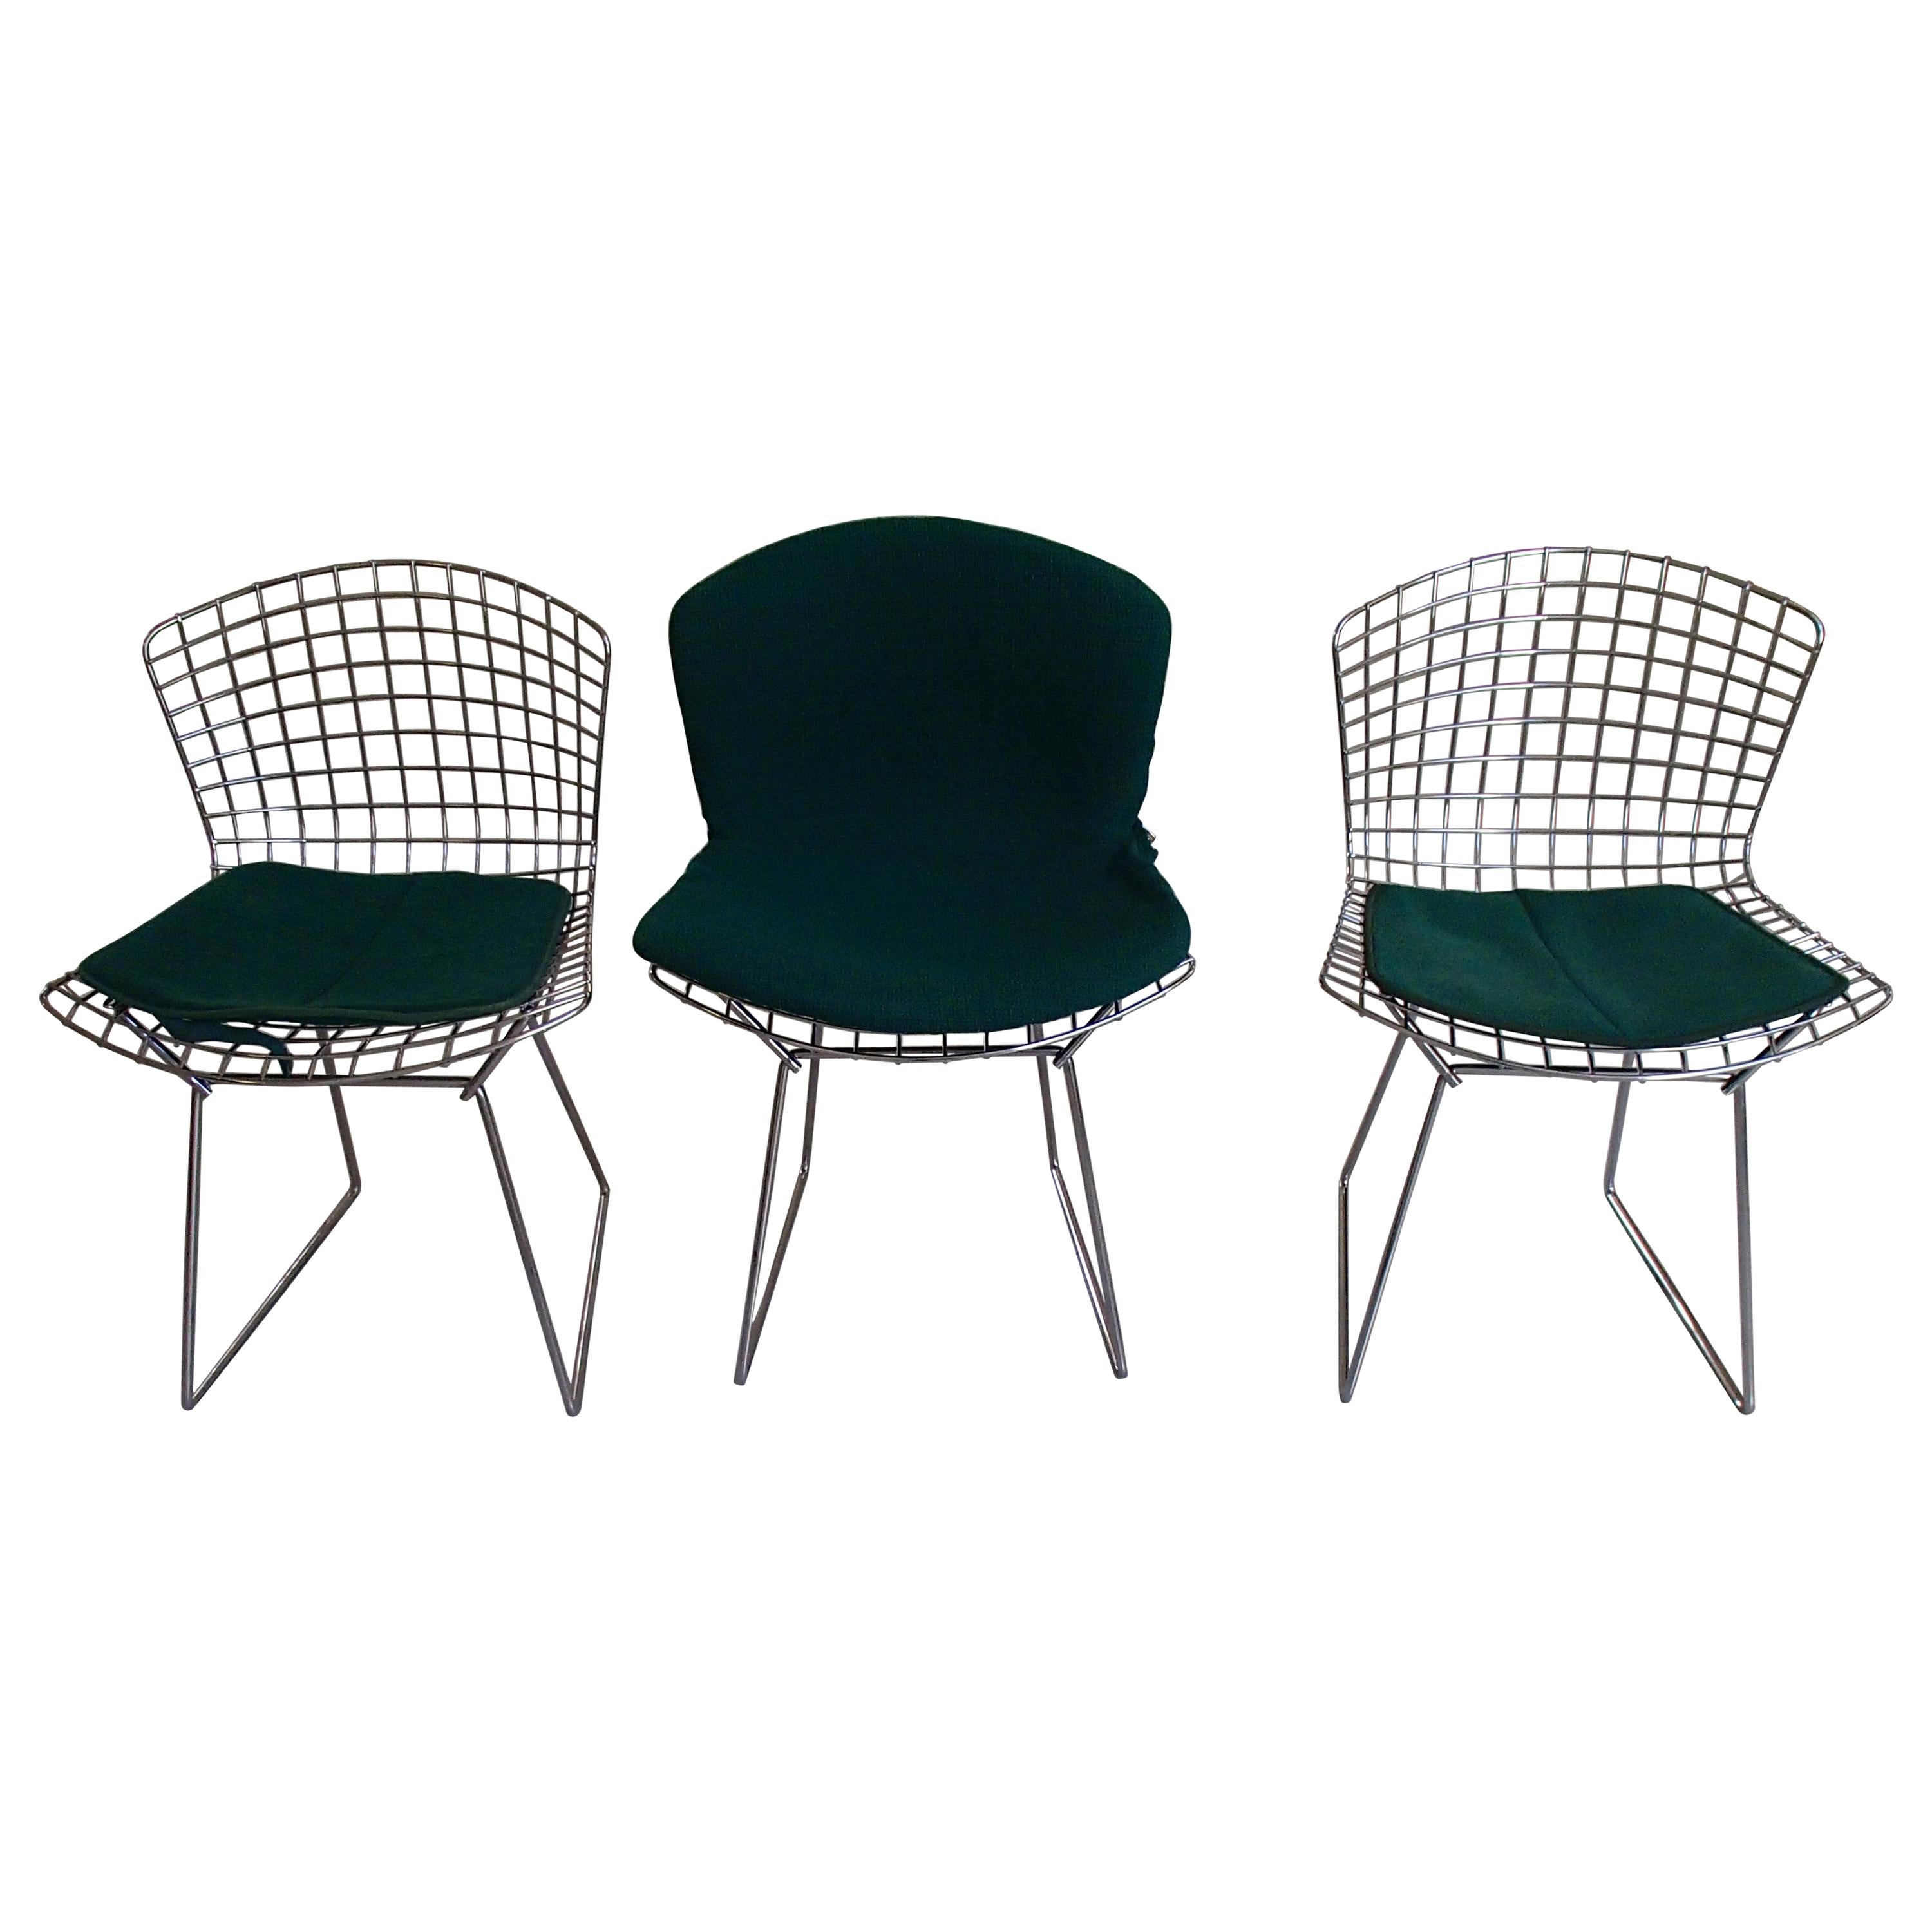 3 Bertoia Chrome Chairs with Green Cushions